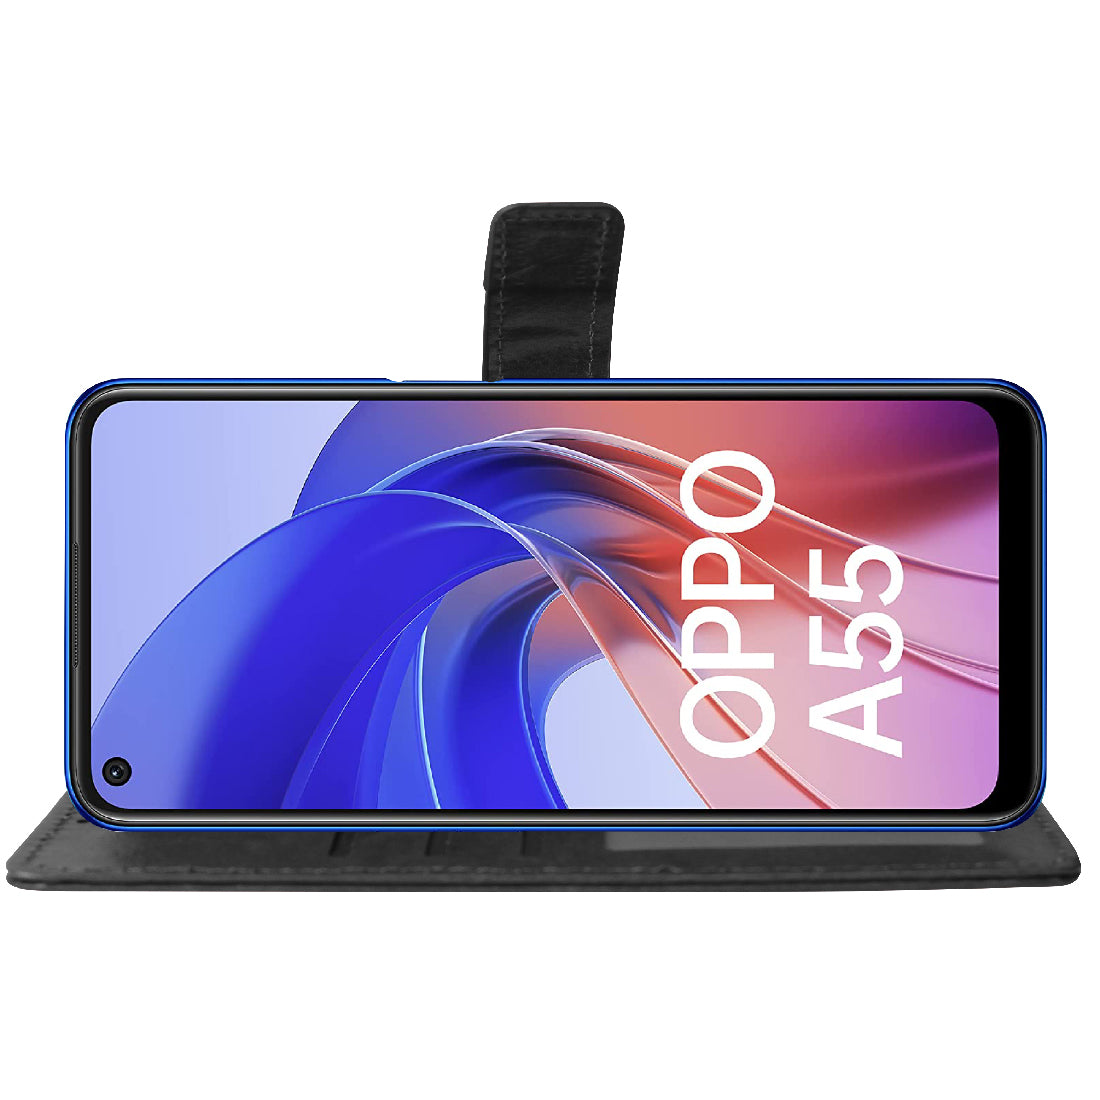 Premium Wallet Flip Cover for Oppo A55 4G